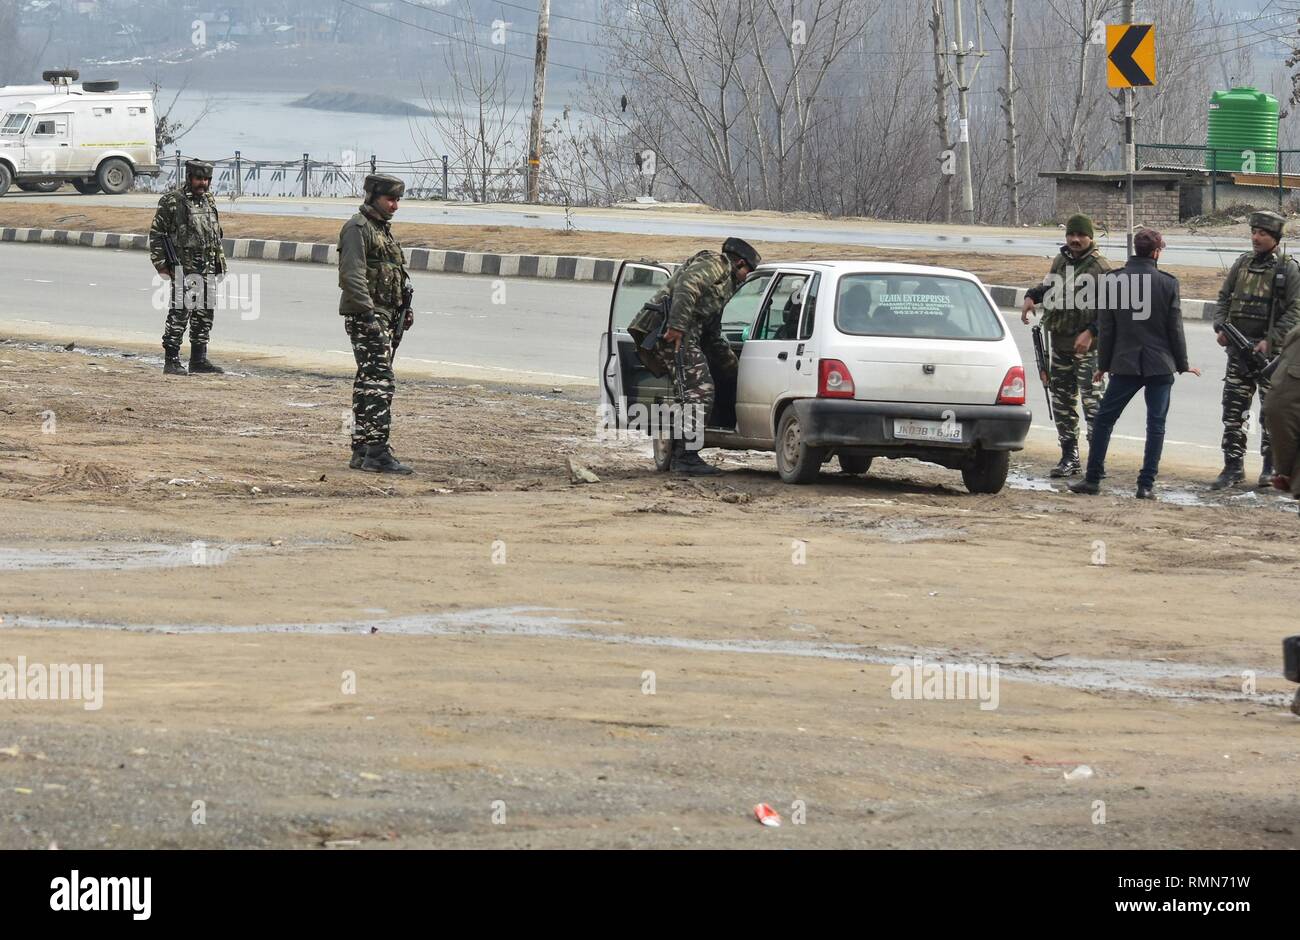 Hizbul Mujahideen terrorist owned explosive-laden car: Cops